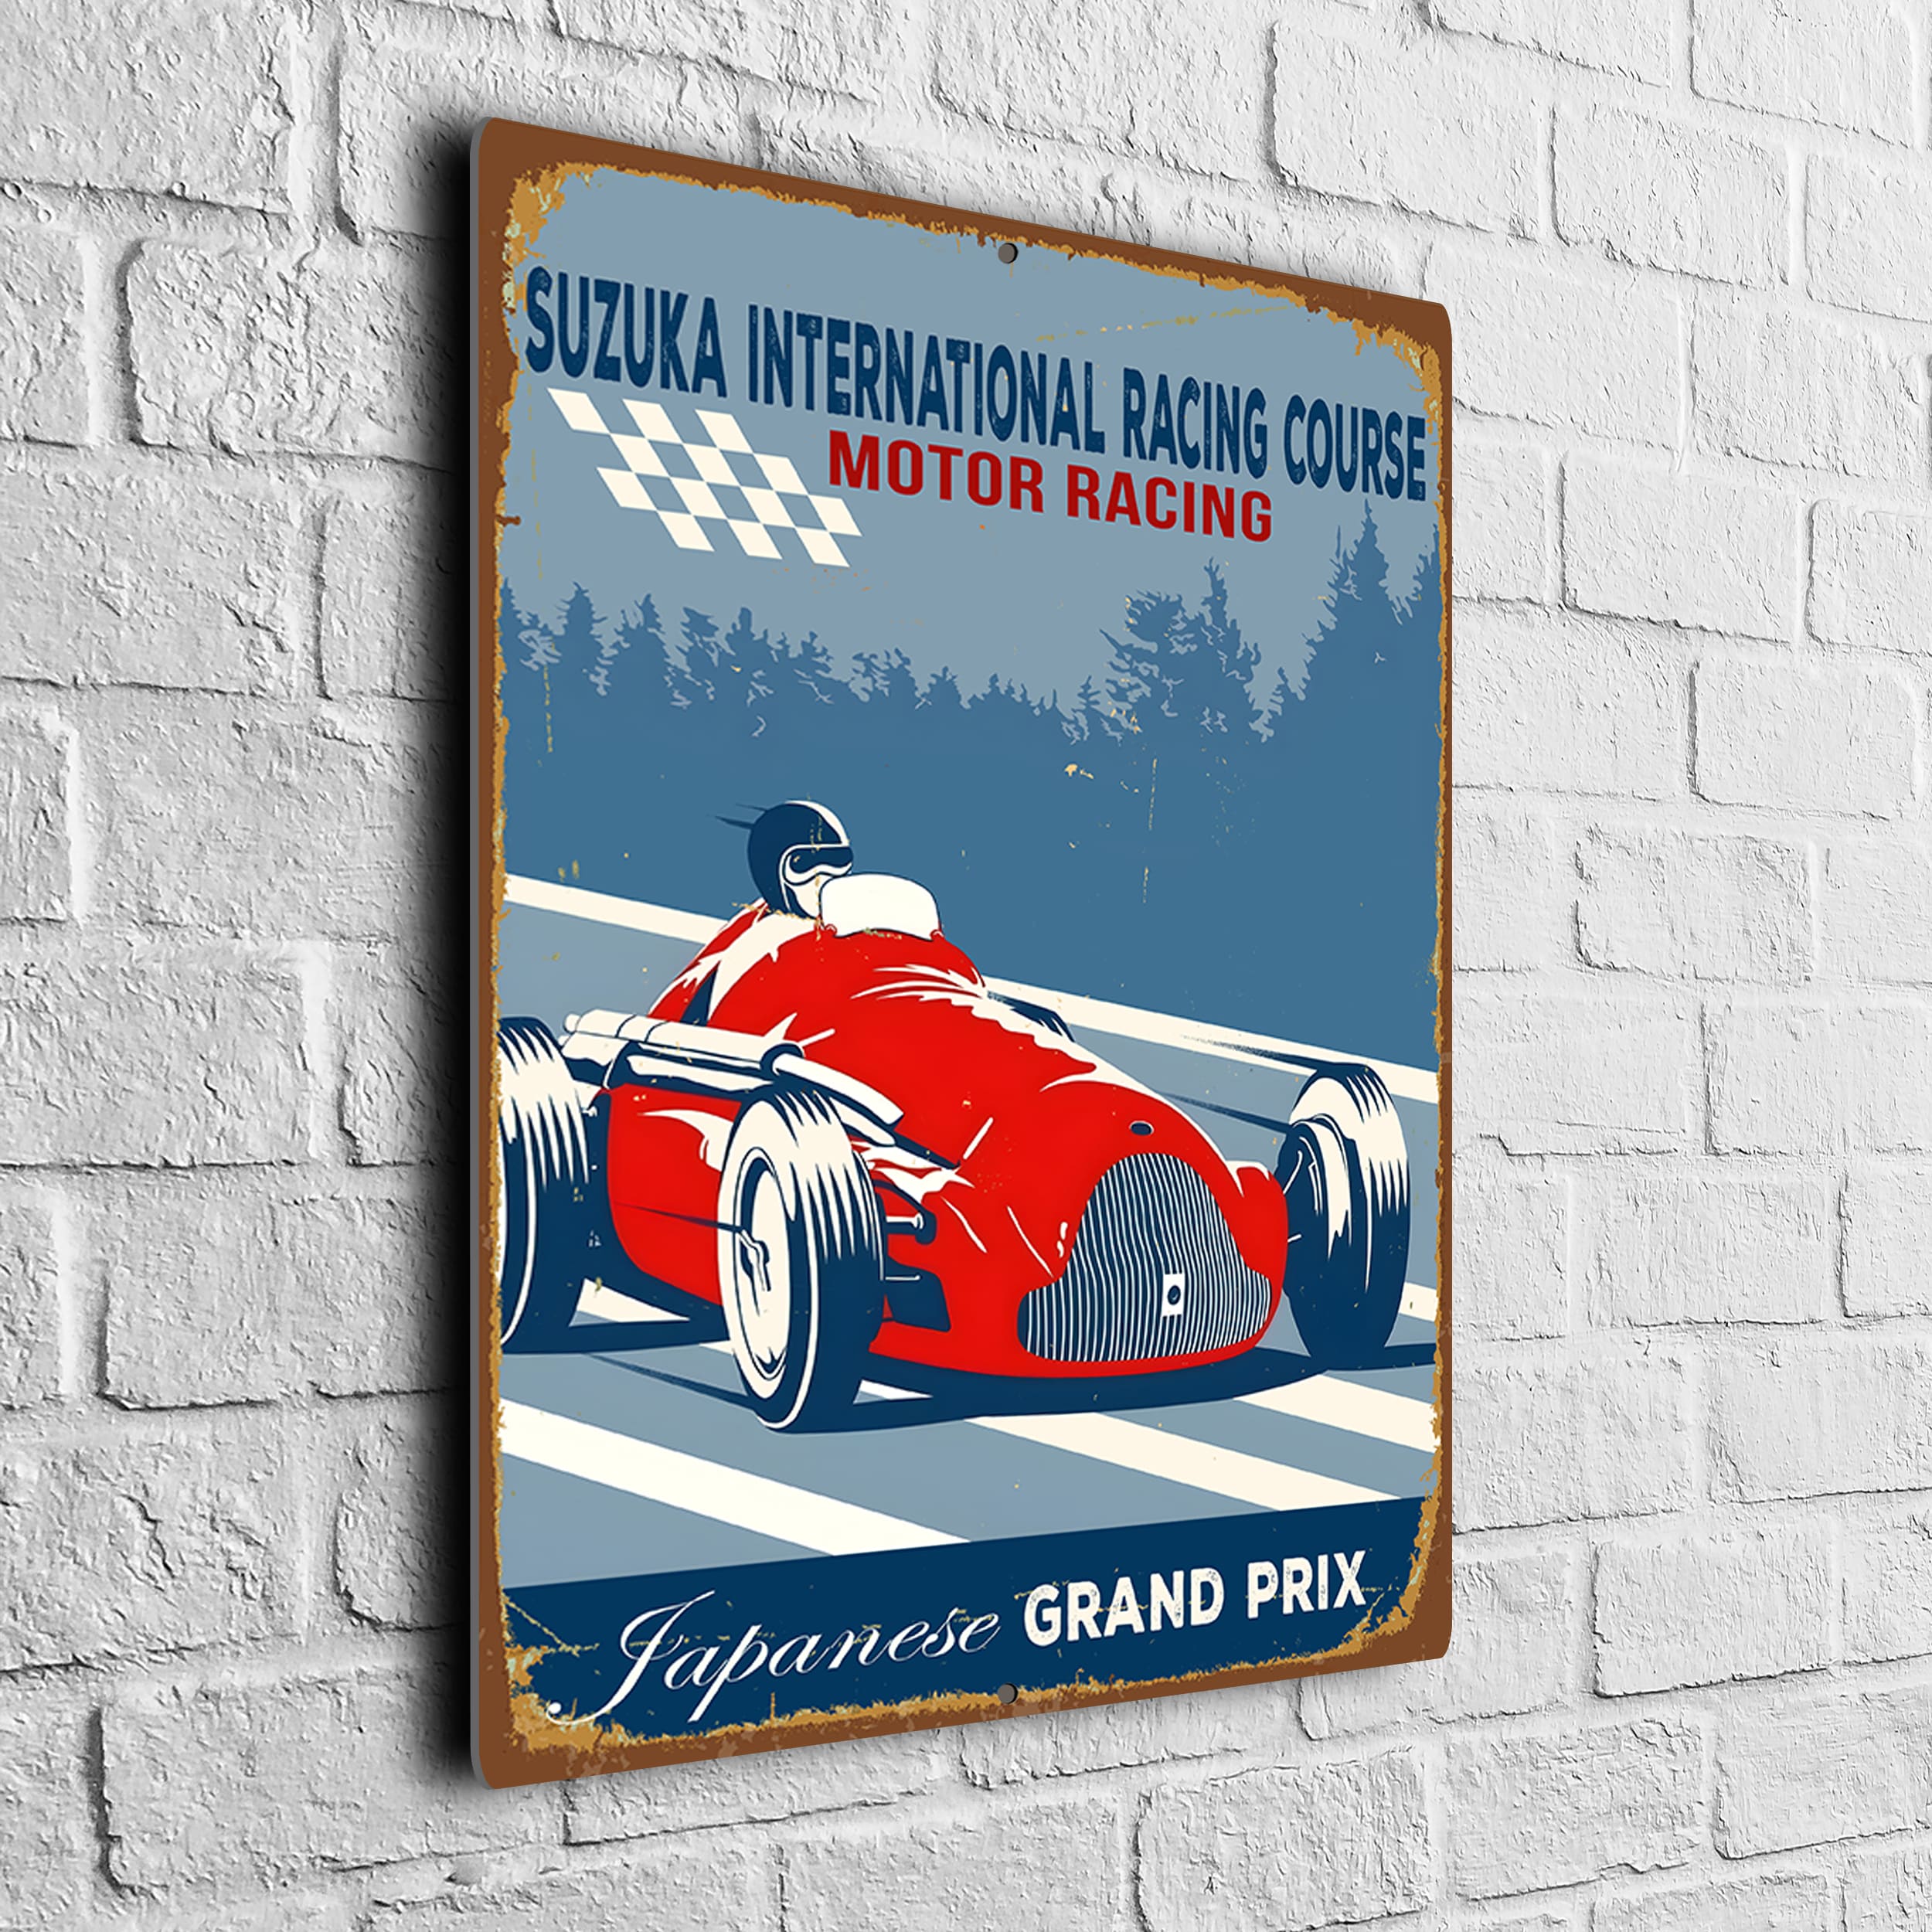 Suzuka-International-Racing-Course-Sign.jpg